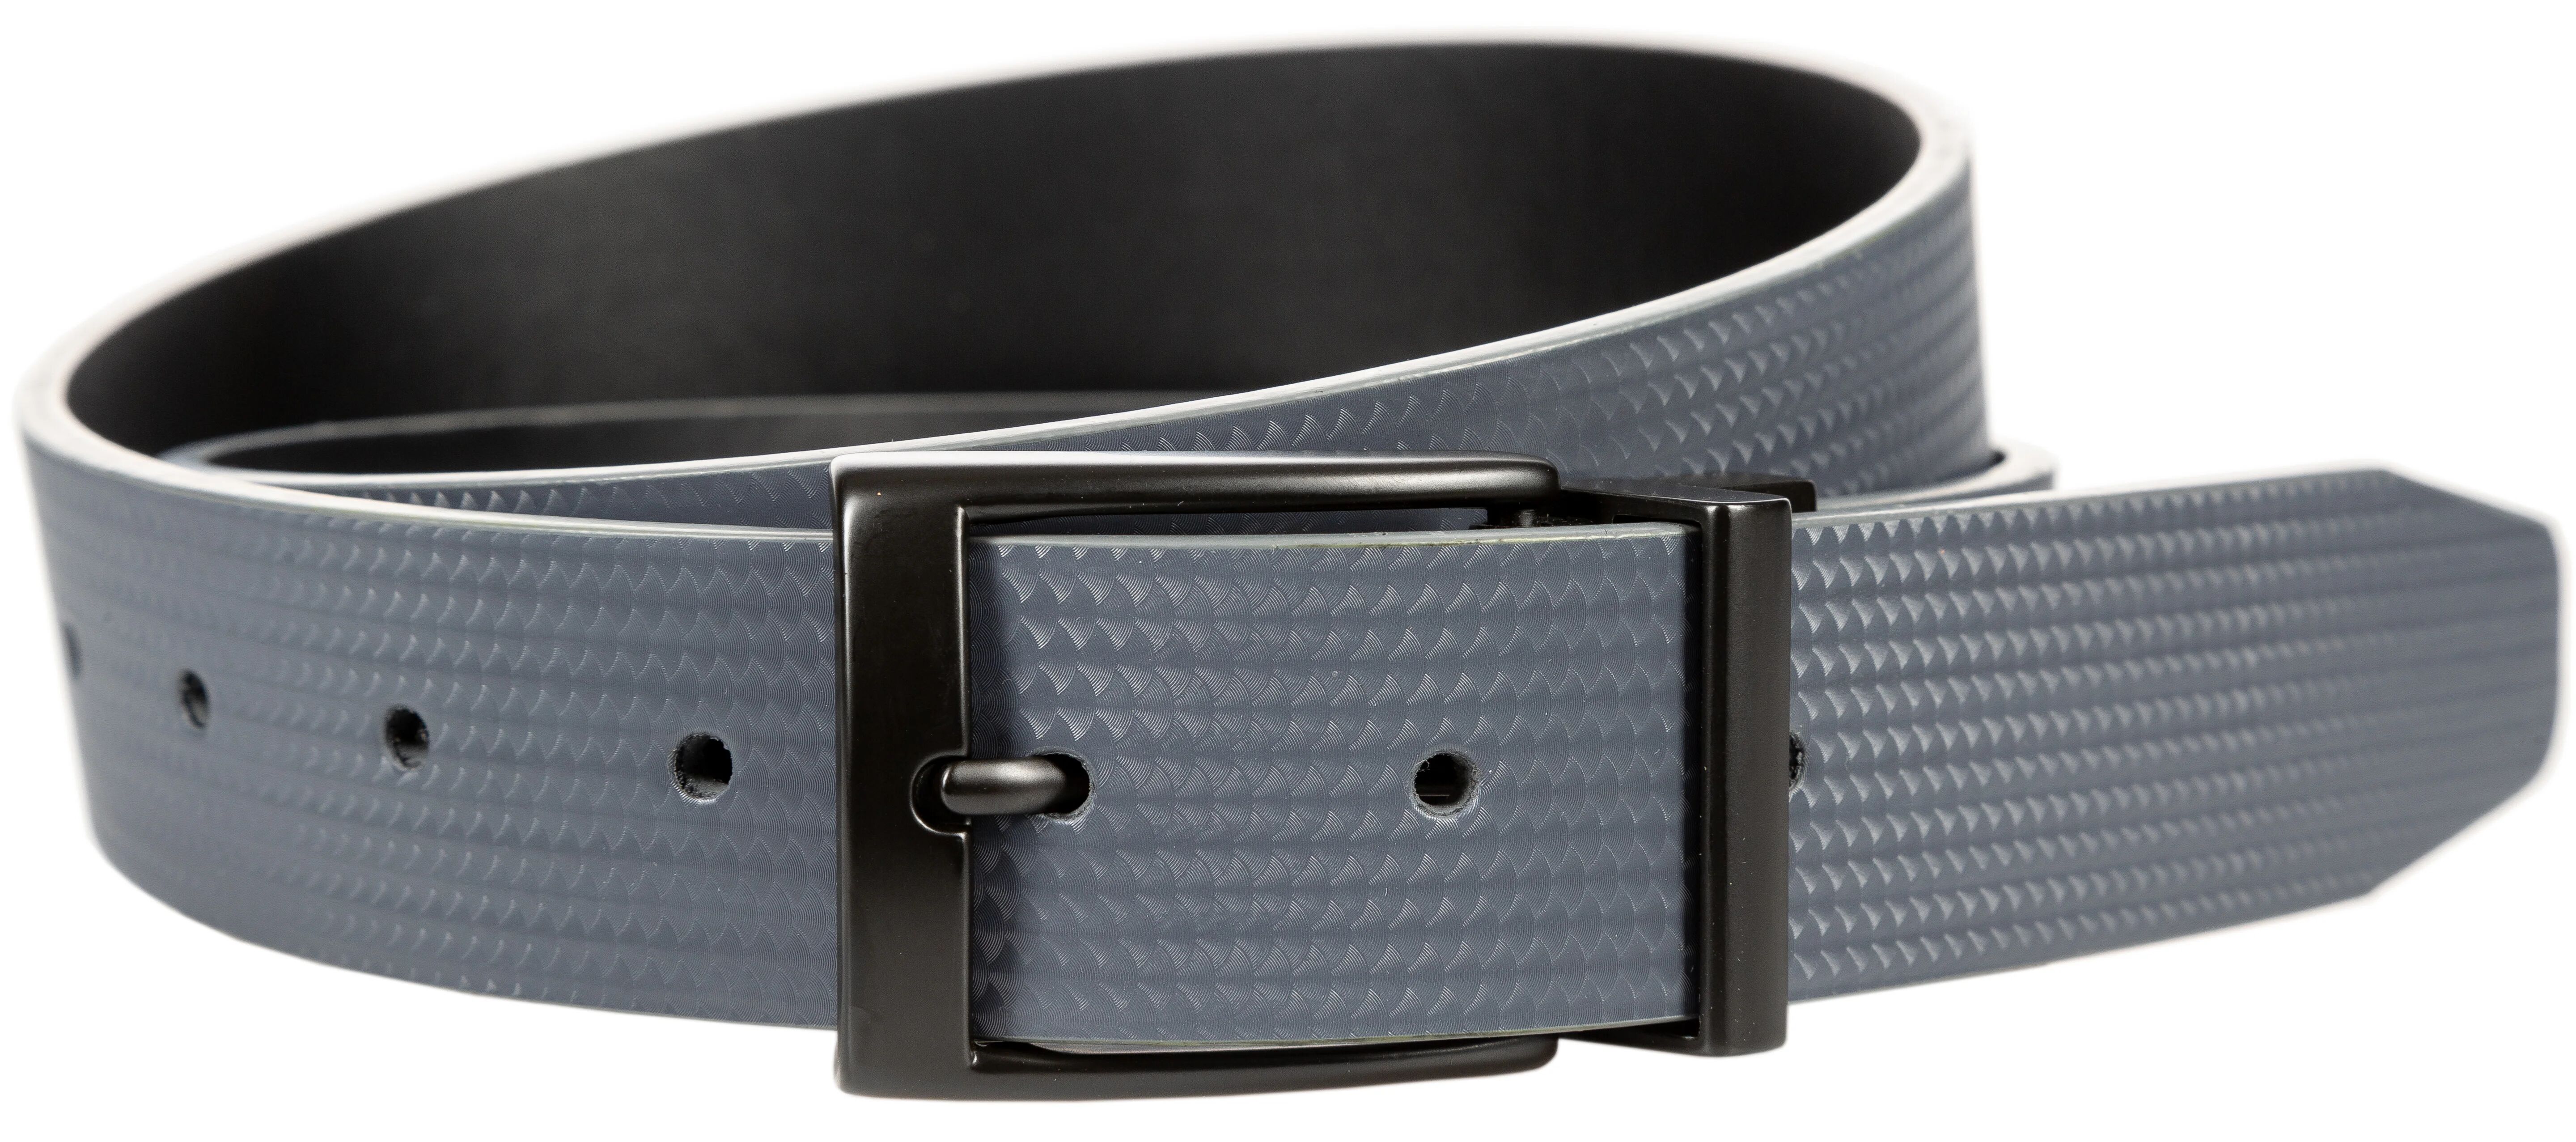 Nike Core Carbon Fiber Reversible Men's Golf Belt - Grey, Size: Medium (34-36)